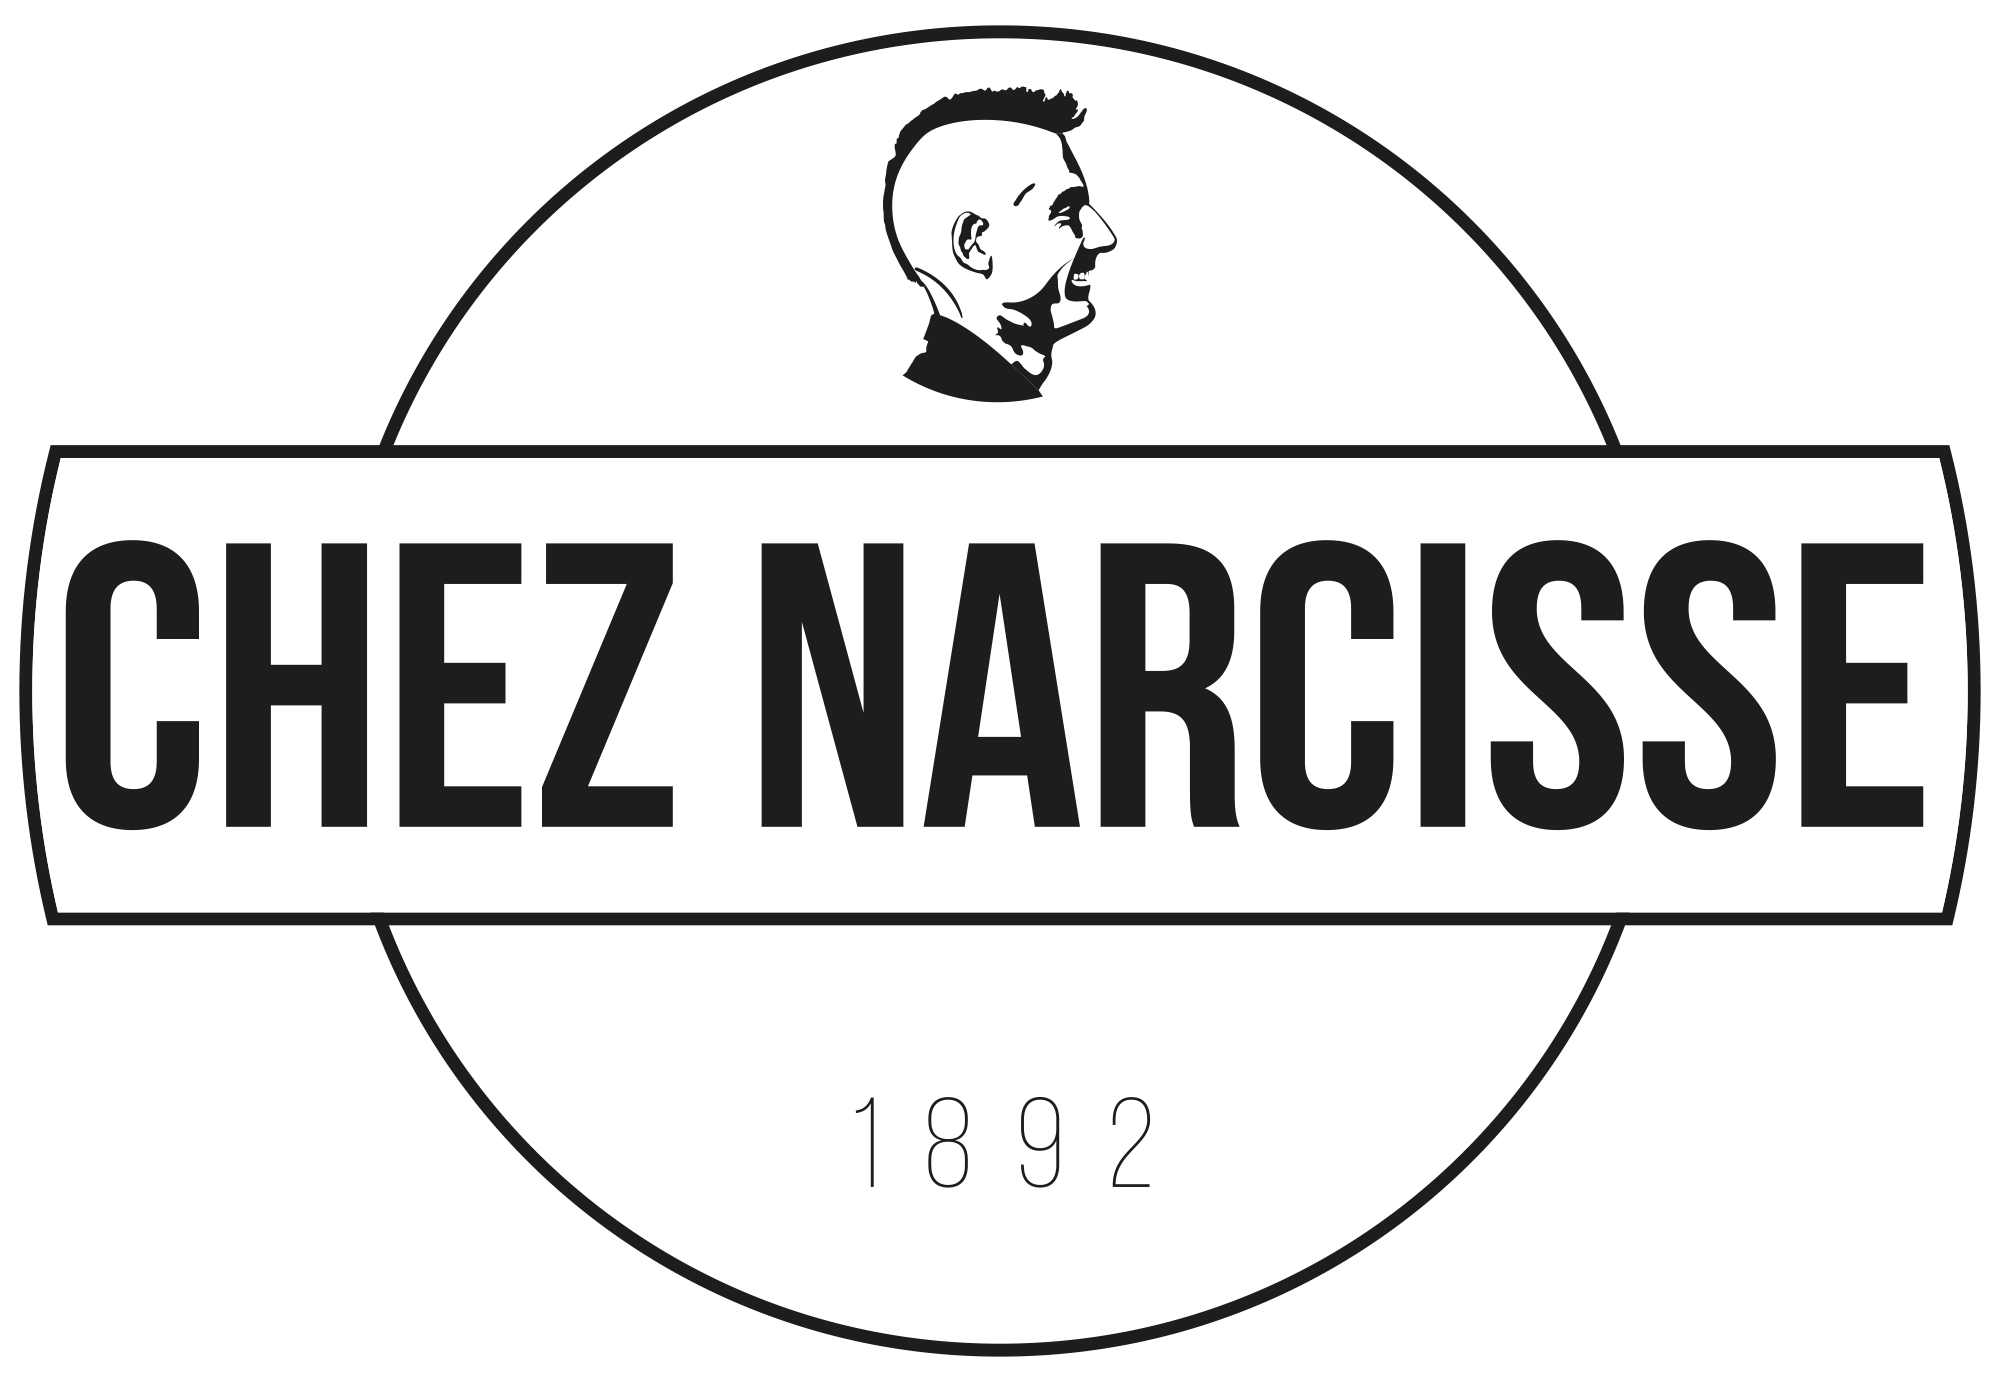 Chez Narcisse